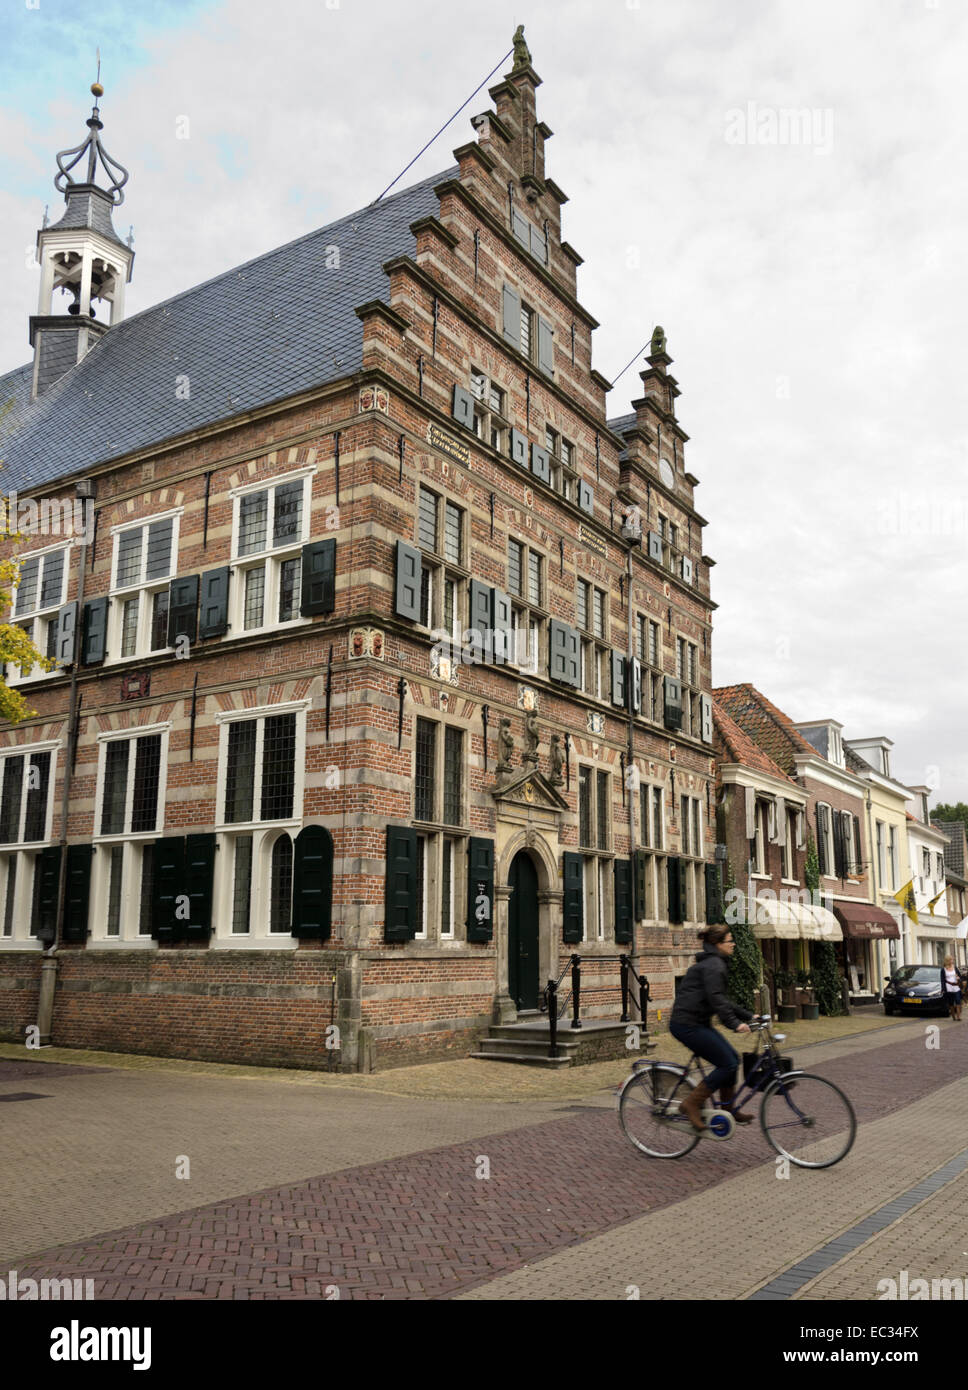 NAARDEN, Paesi Bassi - 30 aprile: Tipica architettura olandese il 30 aprile 2013 a Naarden, Paesi Bassi Foto Stock